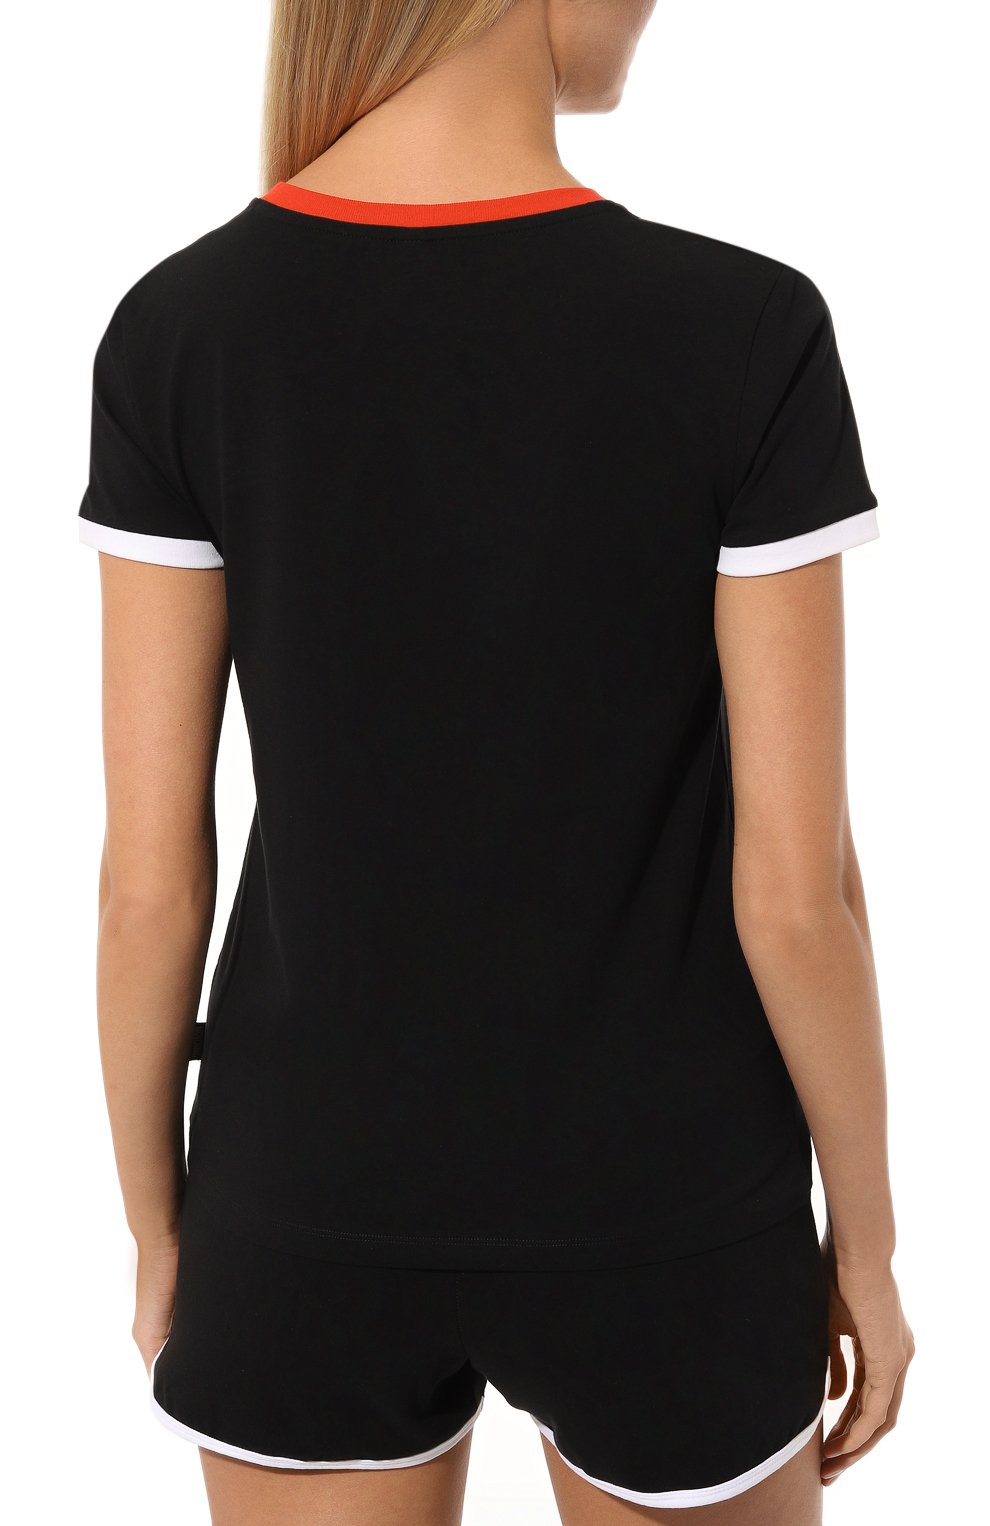 Хлопковая футболка Moschino 232V6/V0710/4410, цвет чёрный, размер 46 232V6/V0710/4410 - фото 4